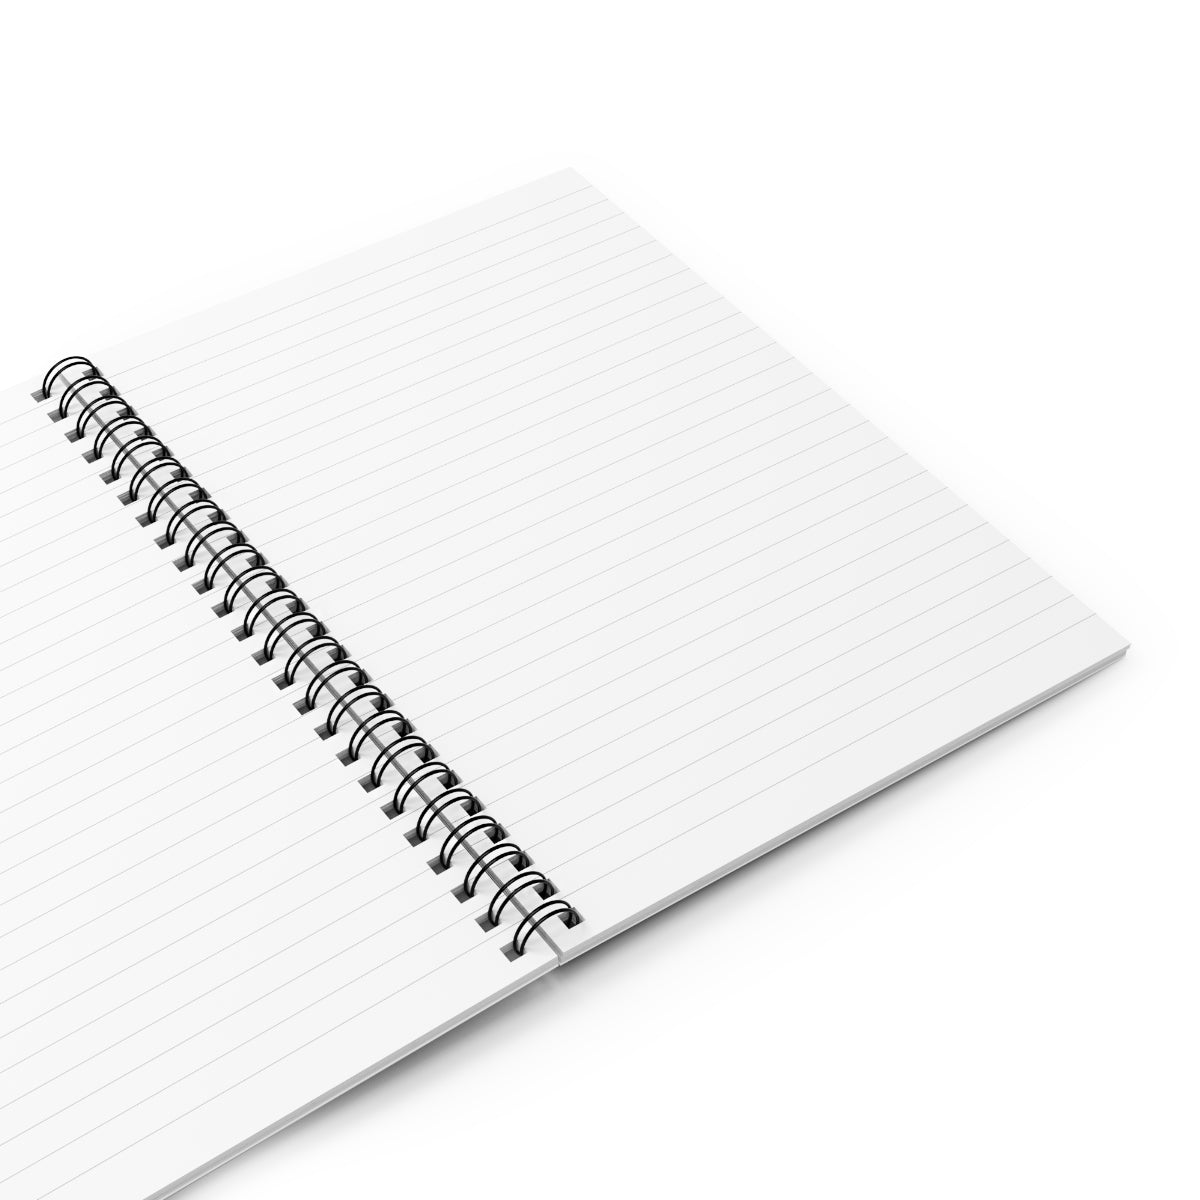 Blue Spiral Notebook - Ruled Line